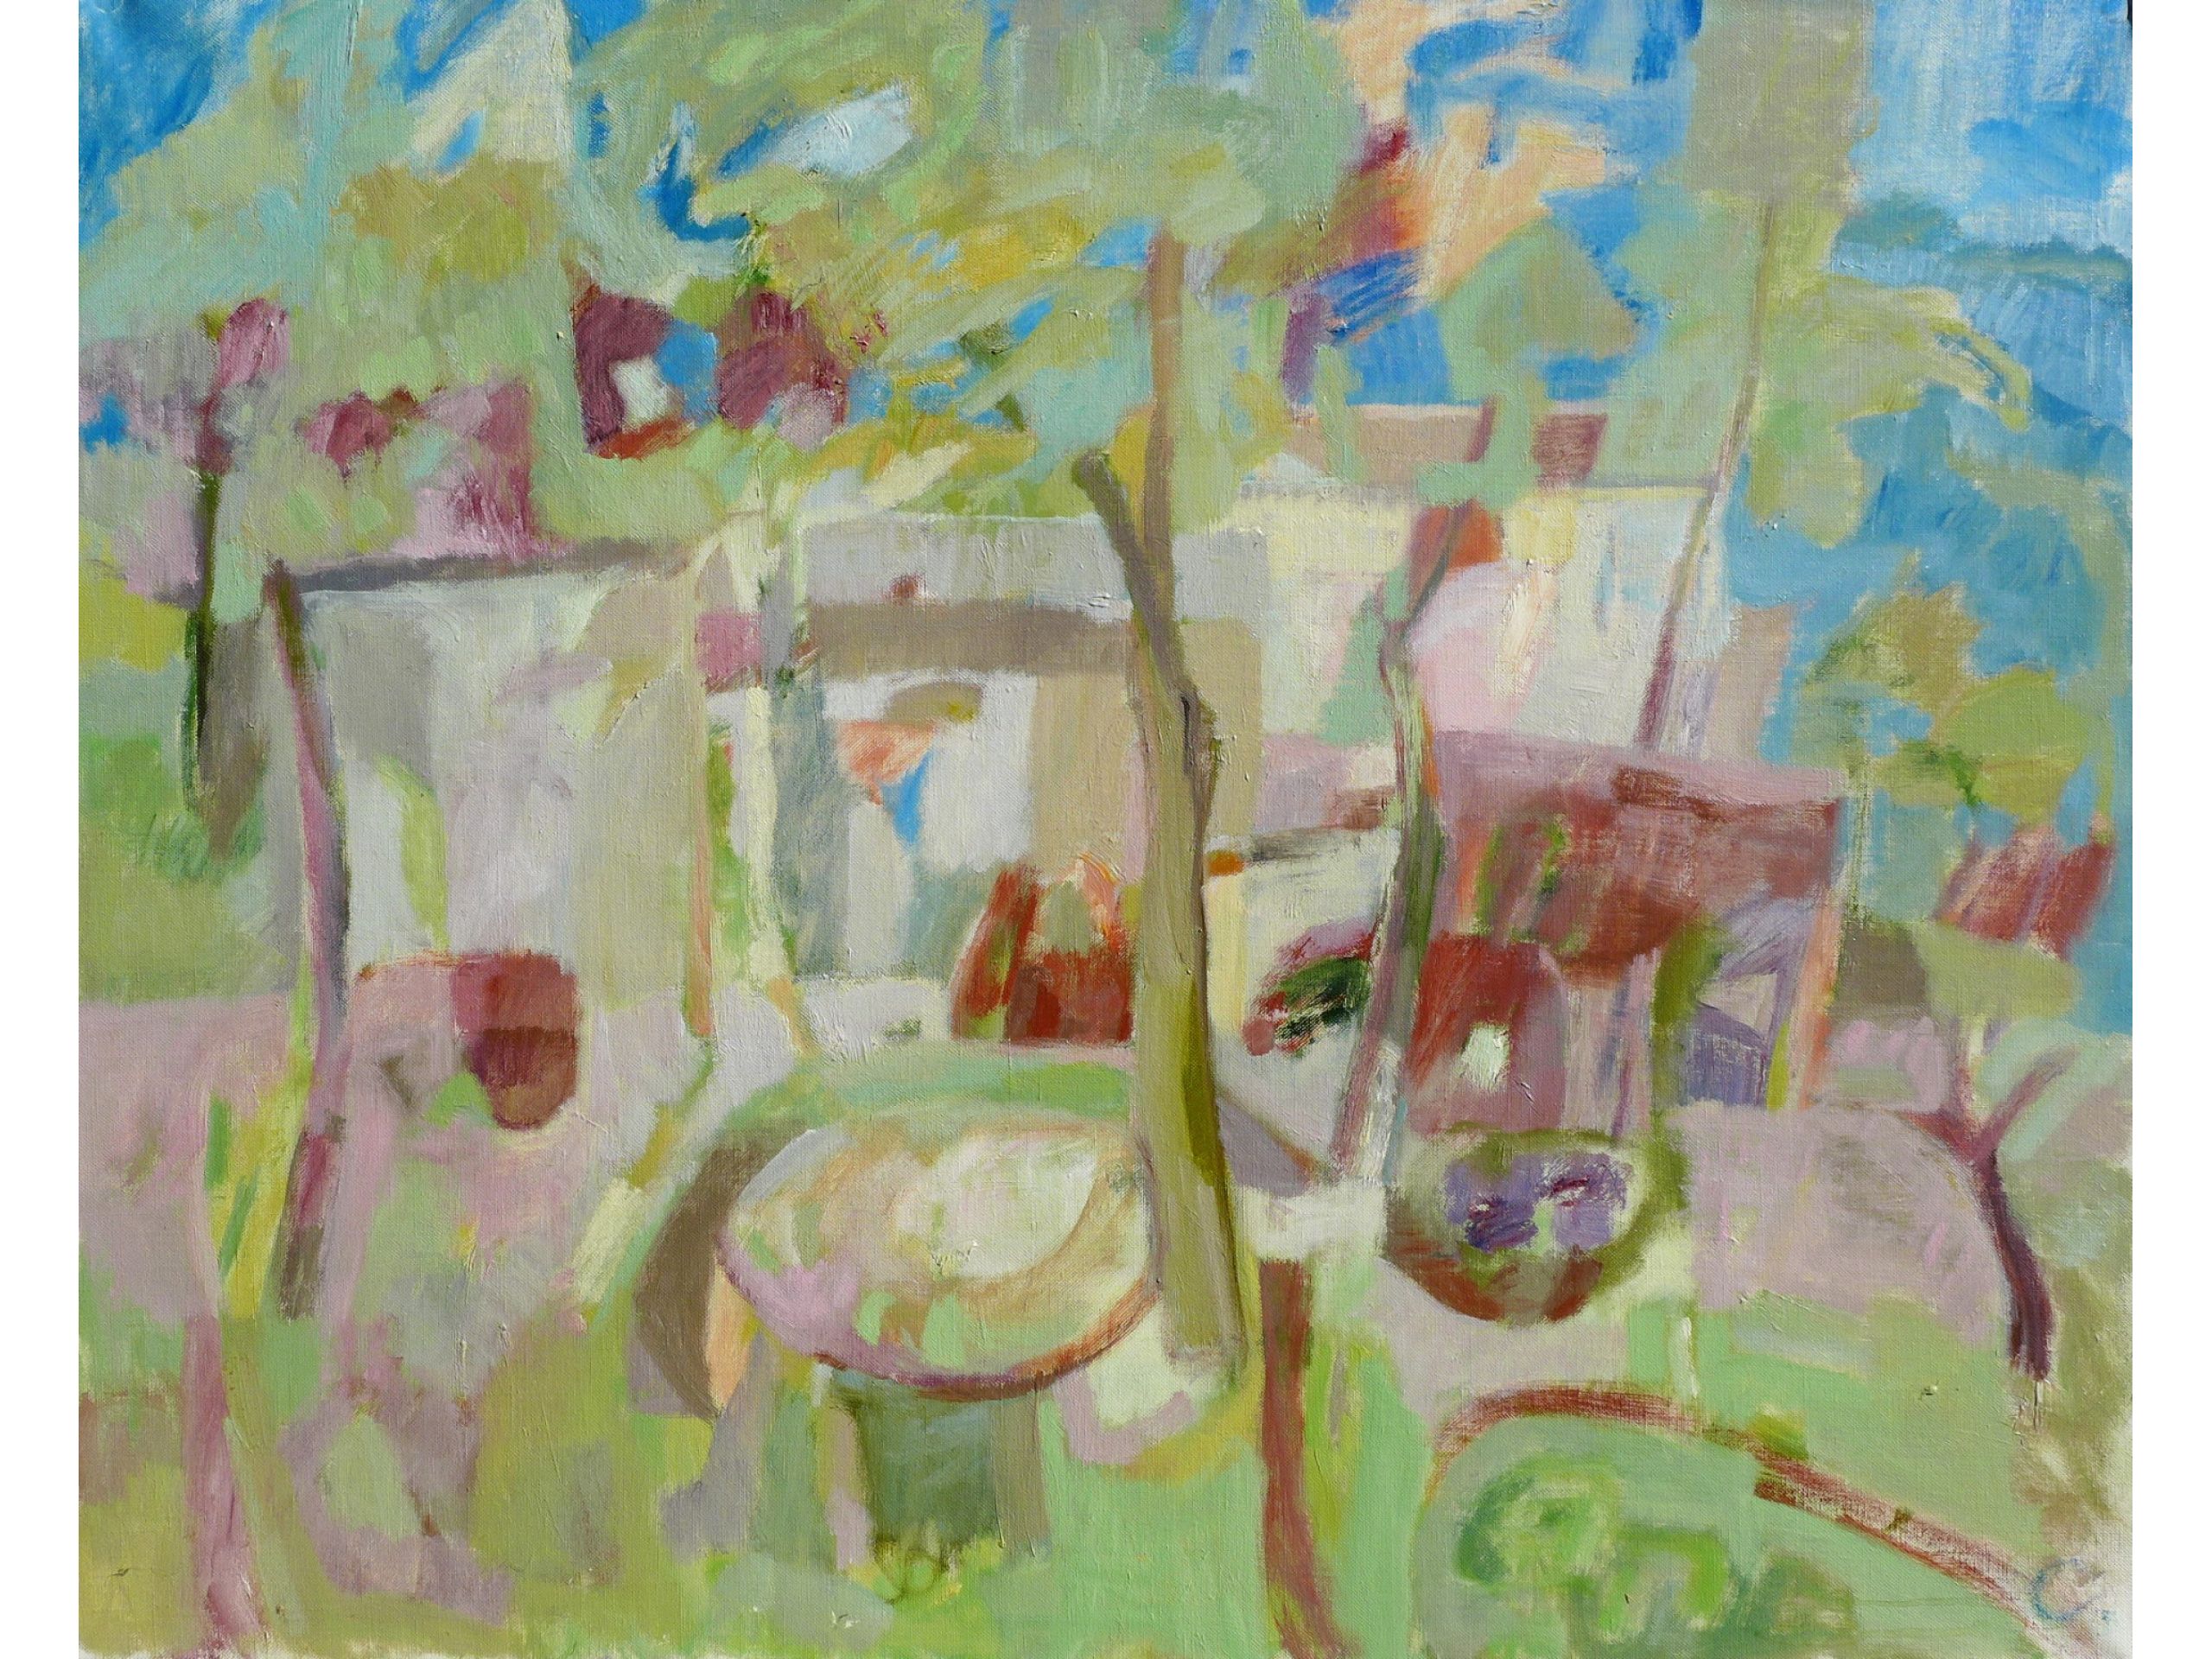 Christine Fausel, 'Garten', 1968, Öl auf Leinwand, 90 x 110 cm, 380 €